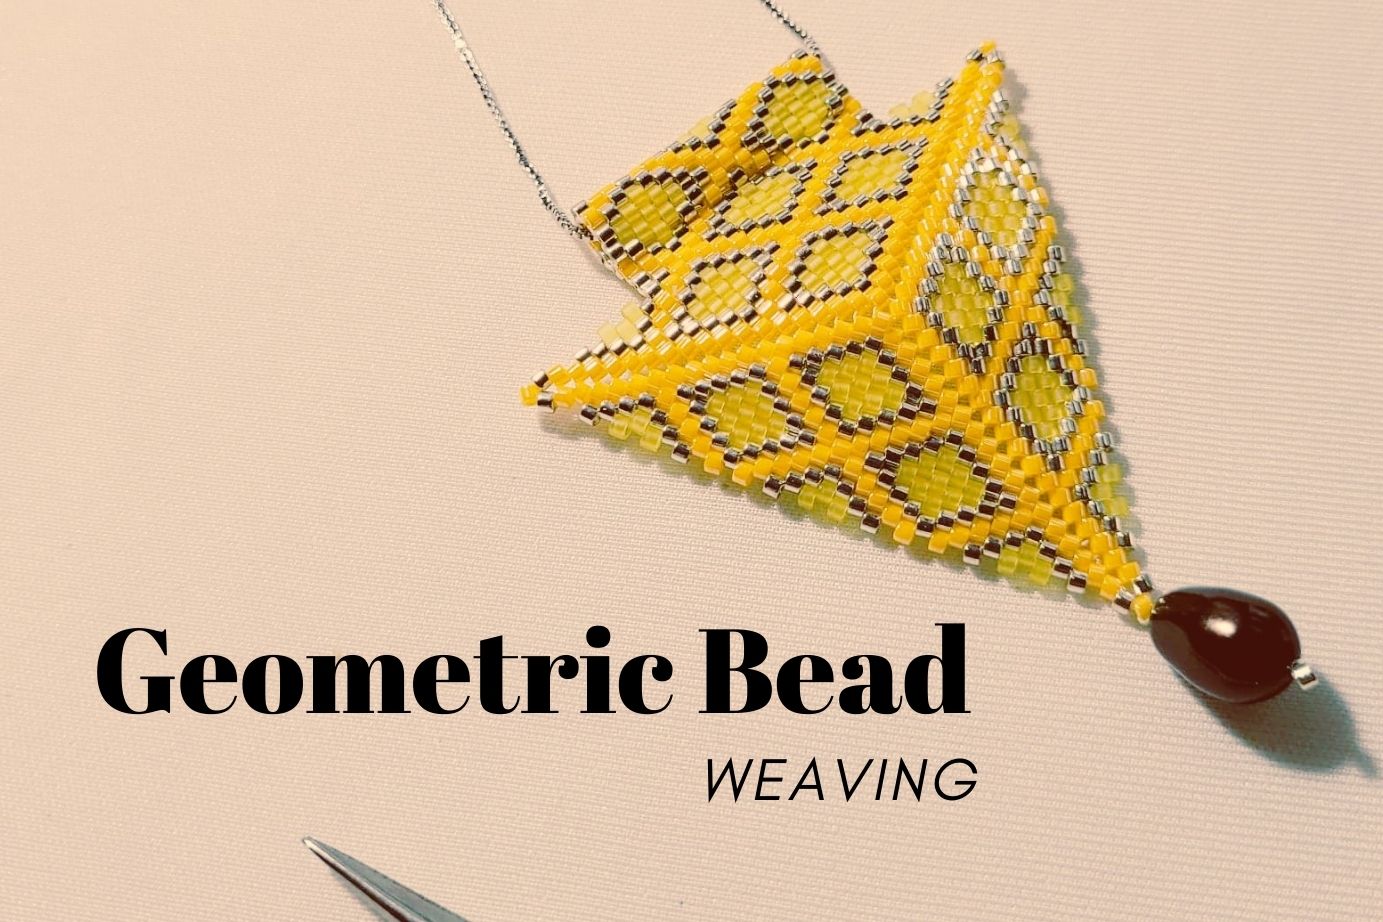 Introduction to Geometric Bead Weaving